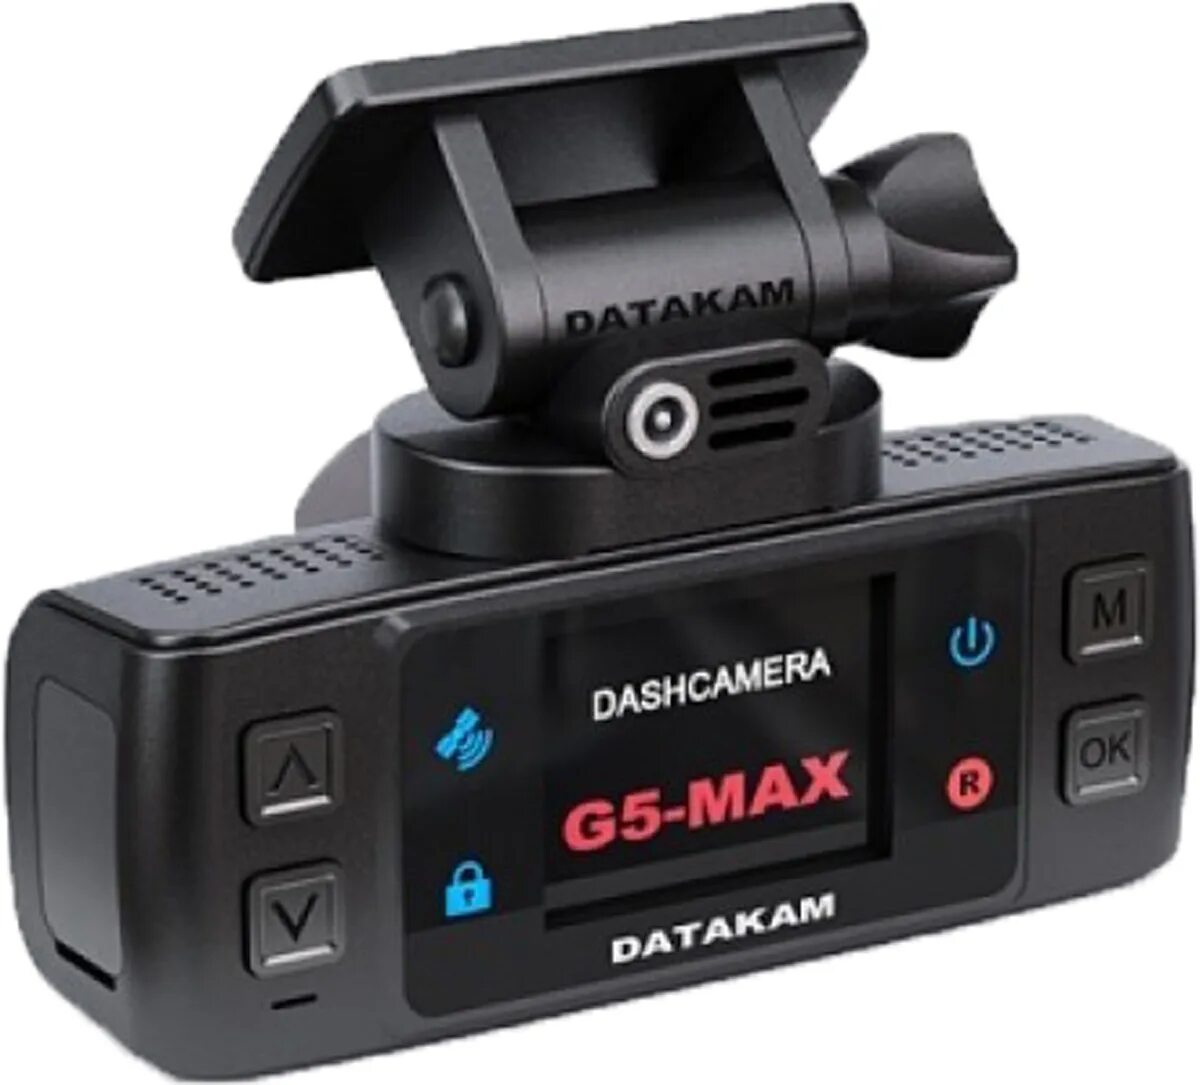 DATAKAM Duo Pro. DATAKAM g5 real. DATAKAM g5 real bf. Видеорегистратор DATAKAM g5 real Max, GPS, ГЛОНАСС.